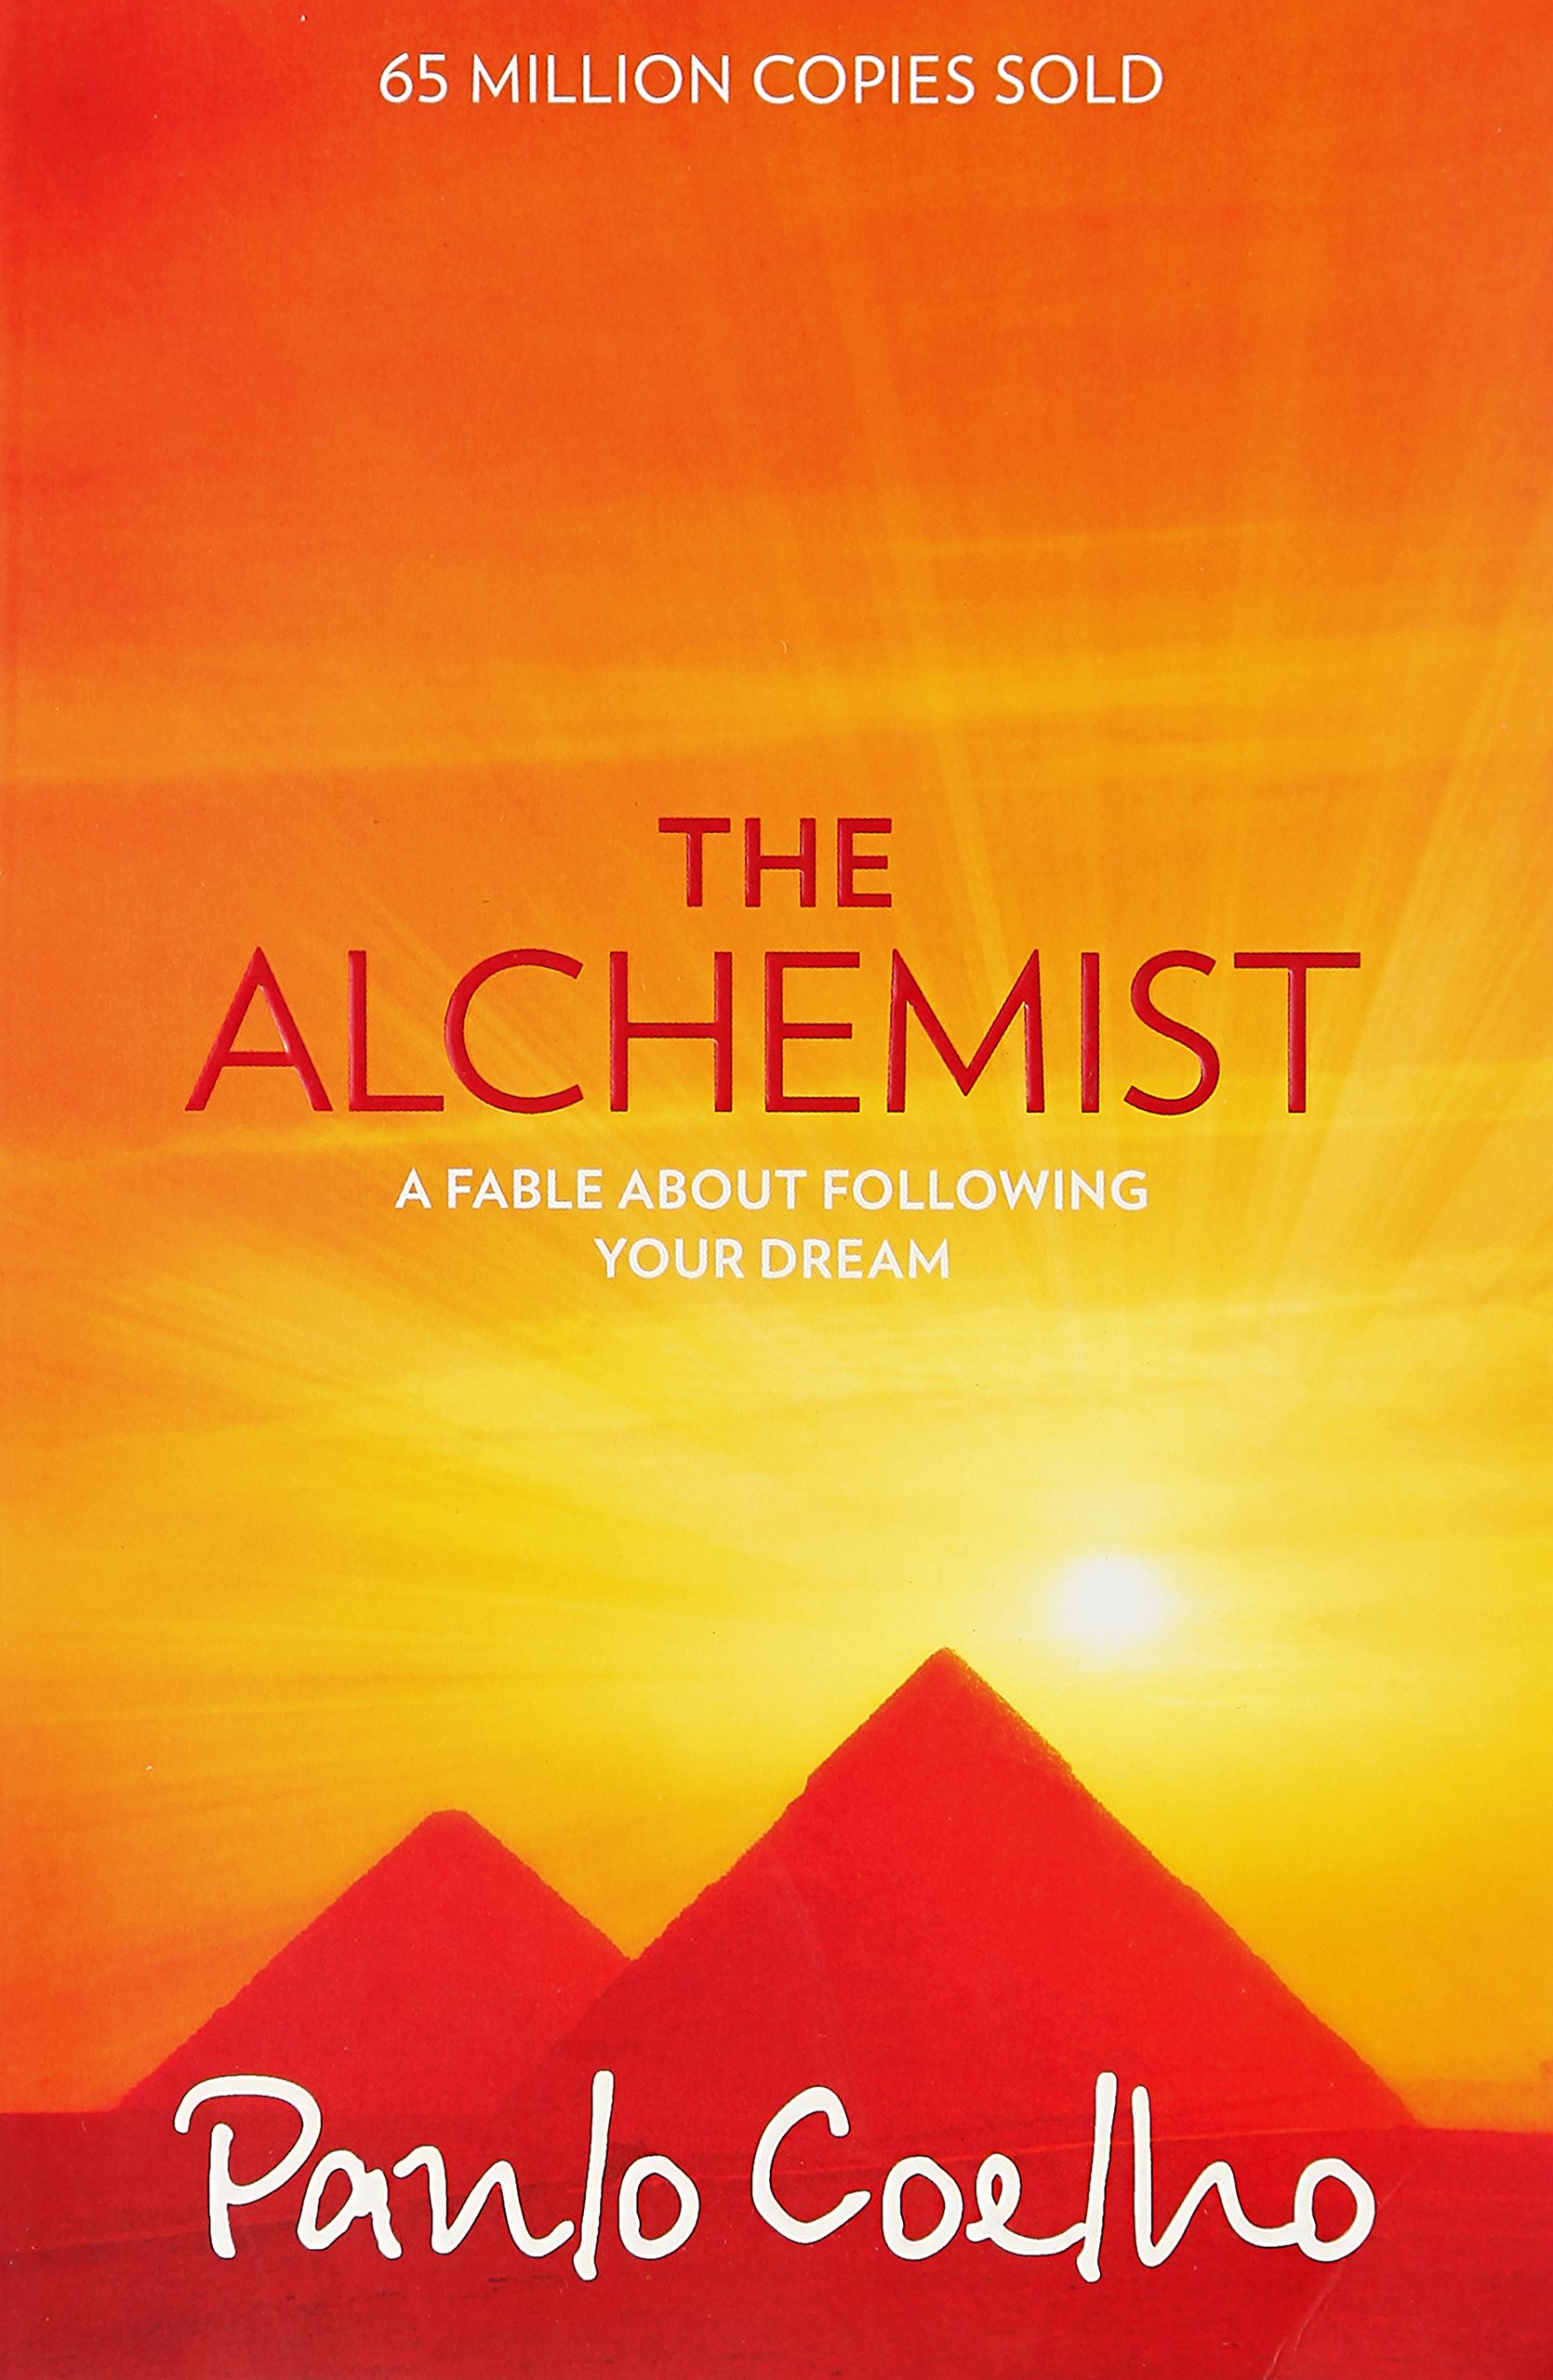 The Alchemist - by Paulo Coelho